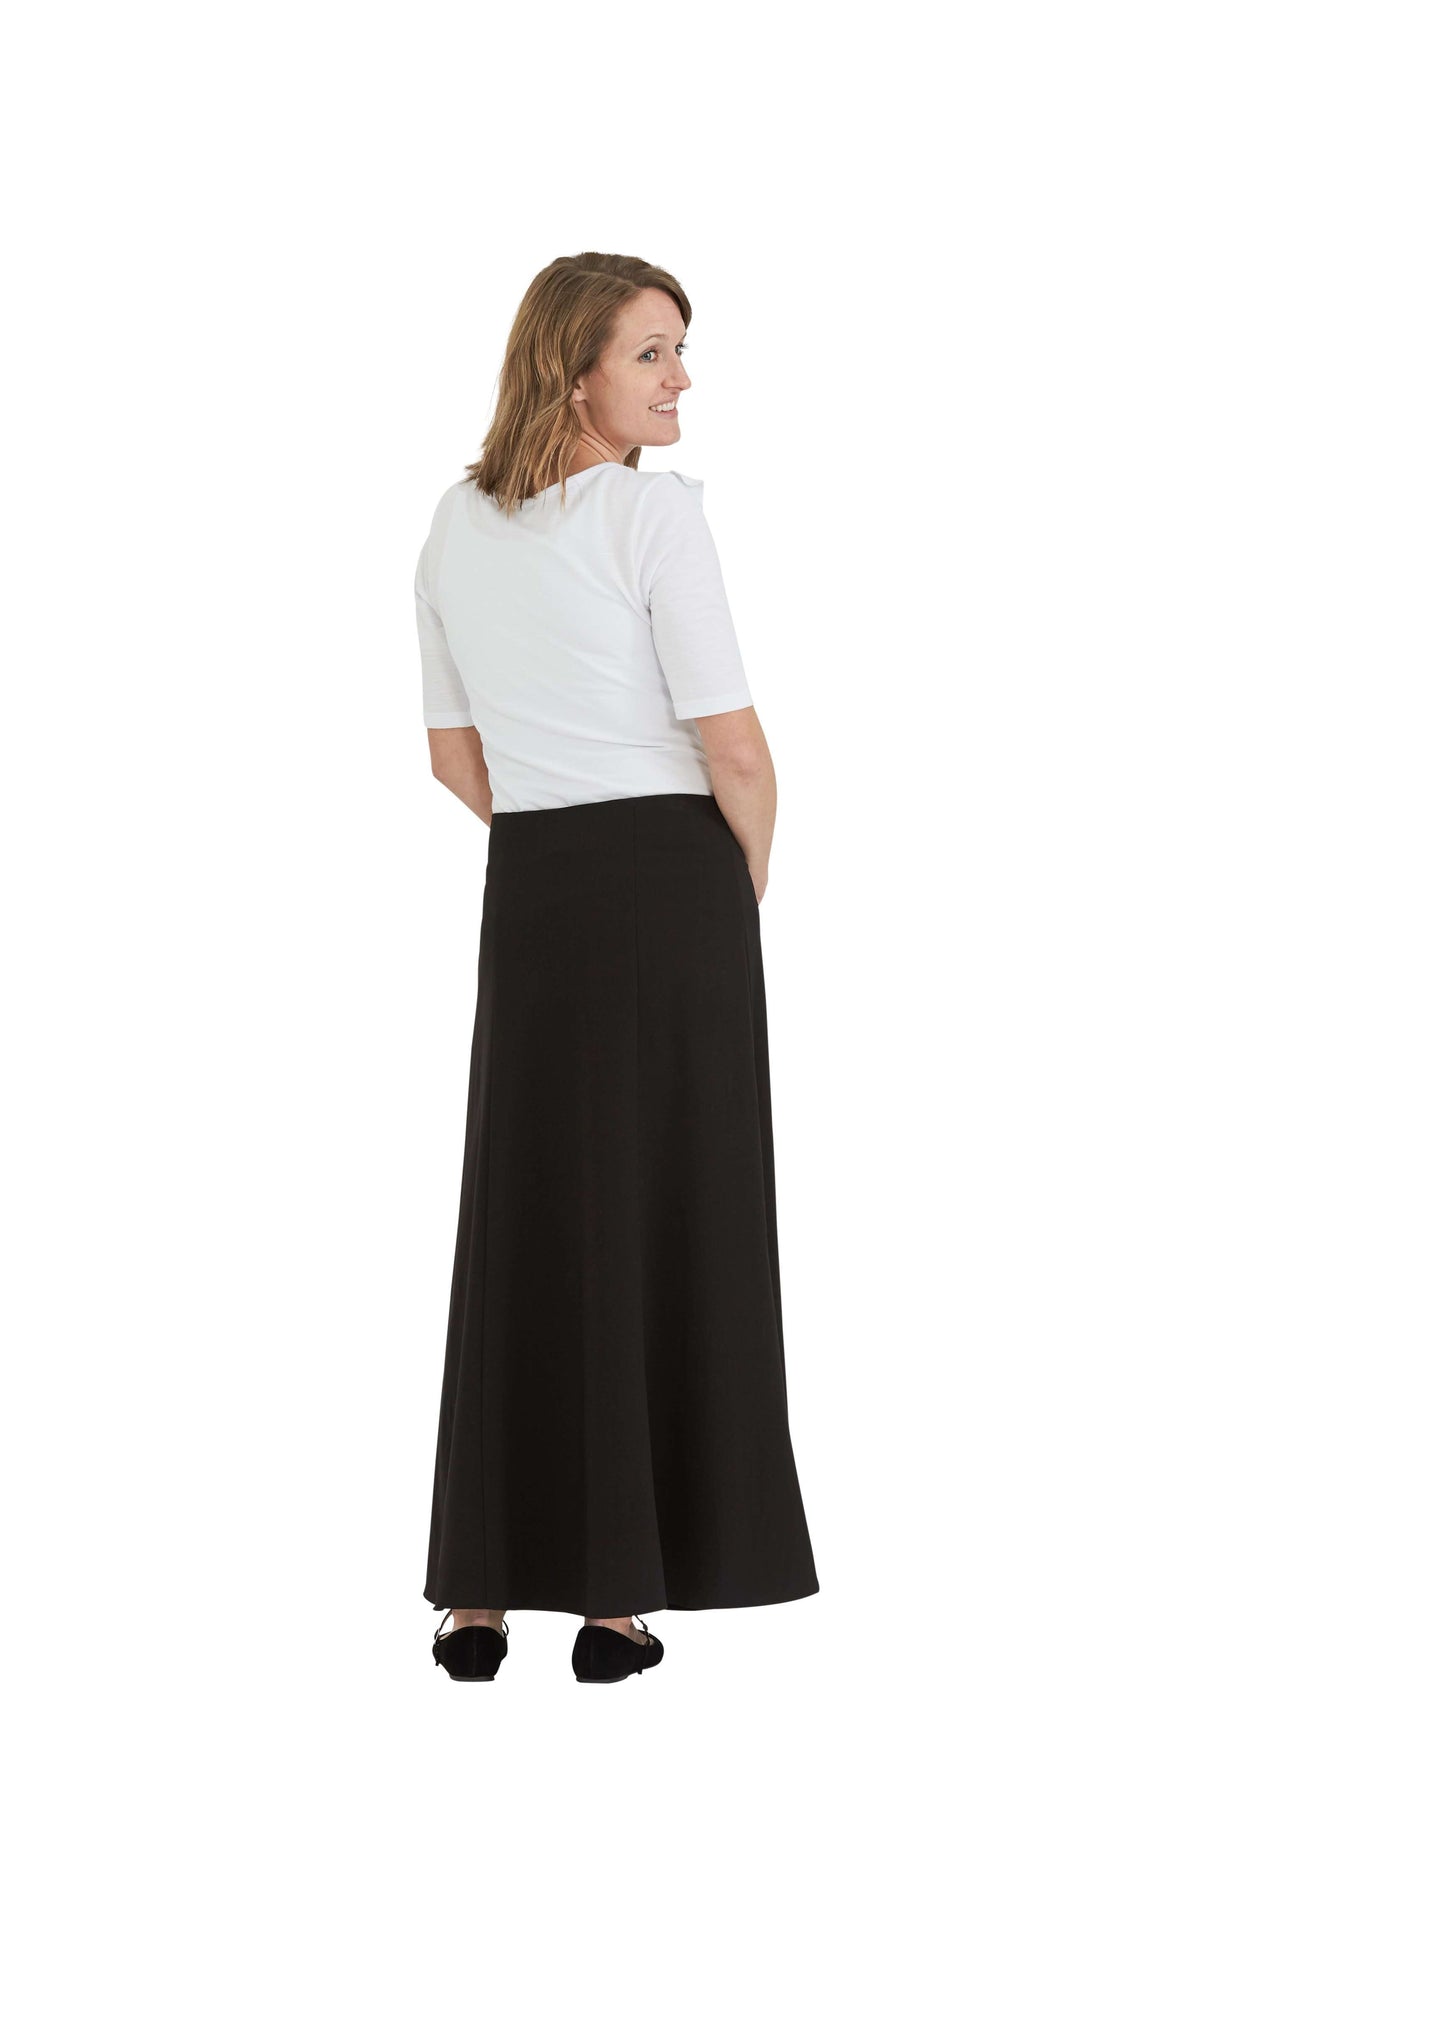 Heidi Long Dress Skirt - FINAL SALE Skirts